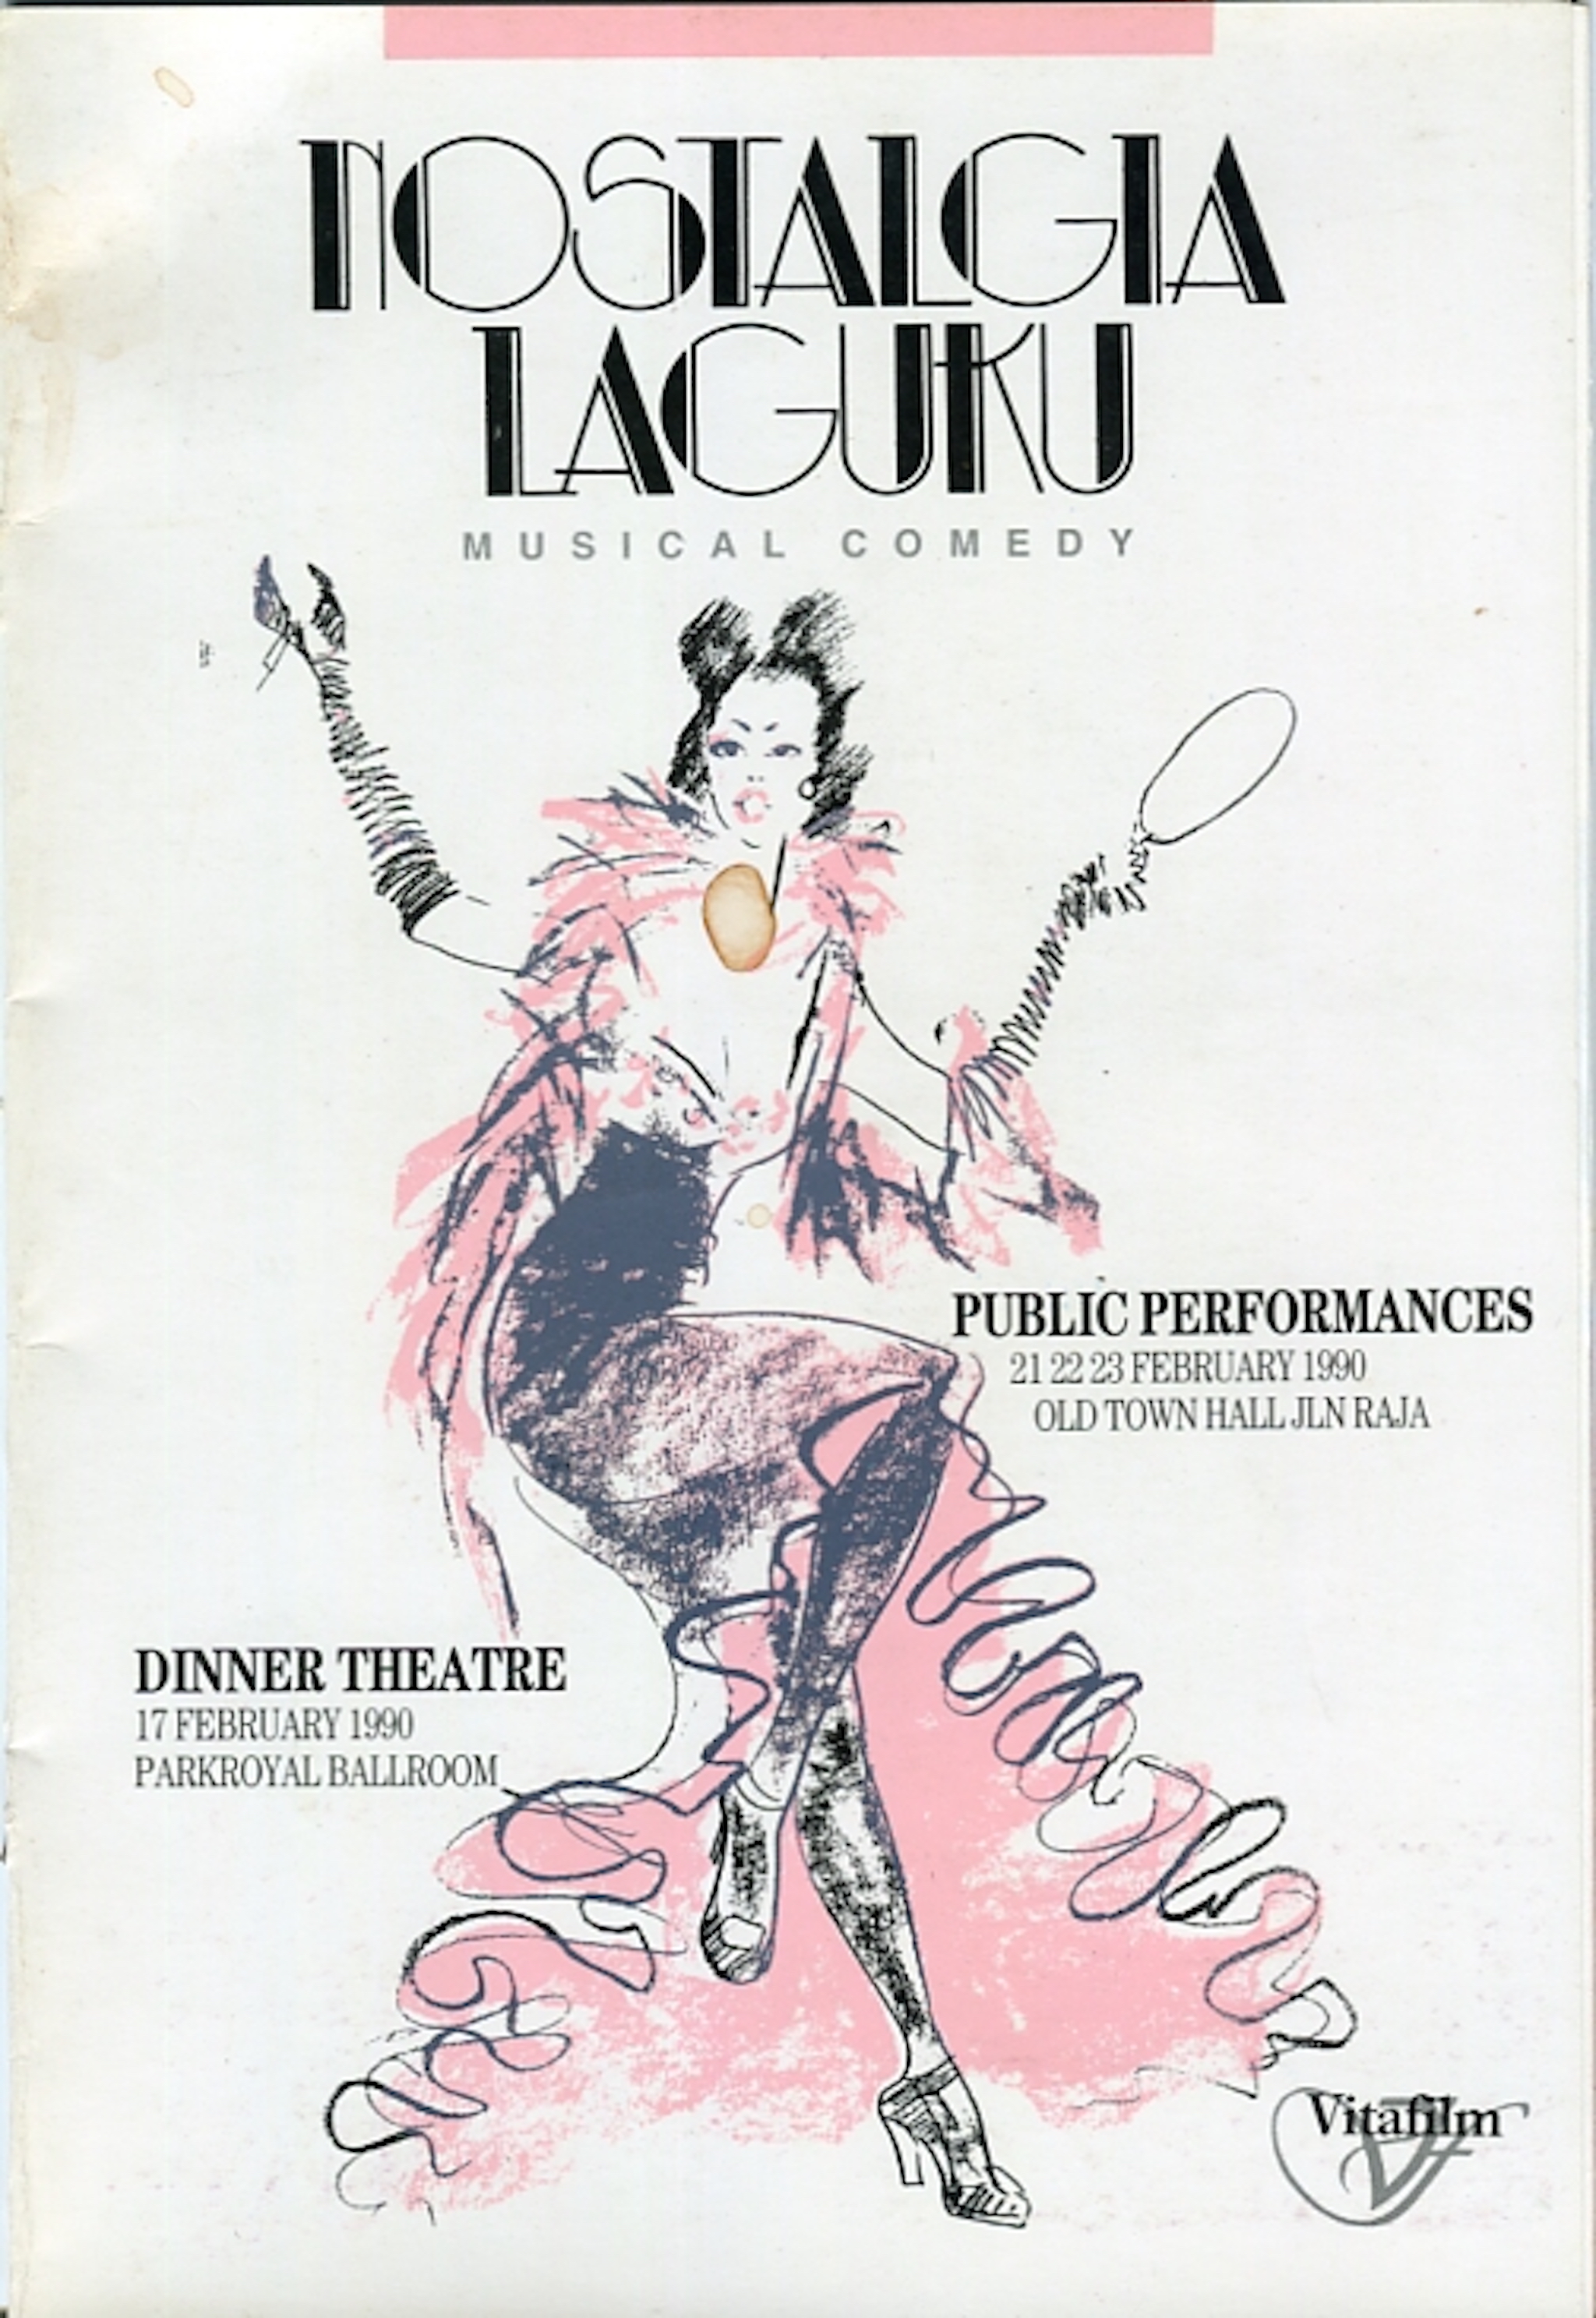 1990 Nostalgia Laguku cover